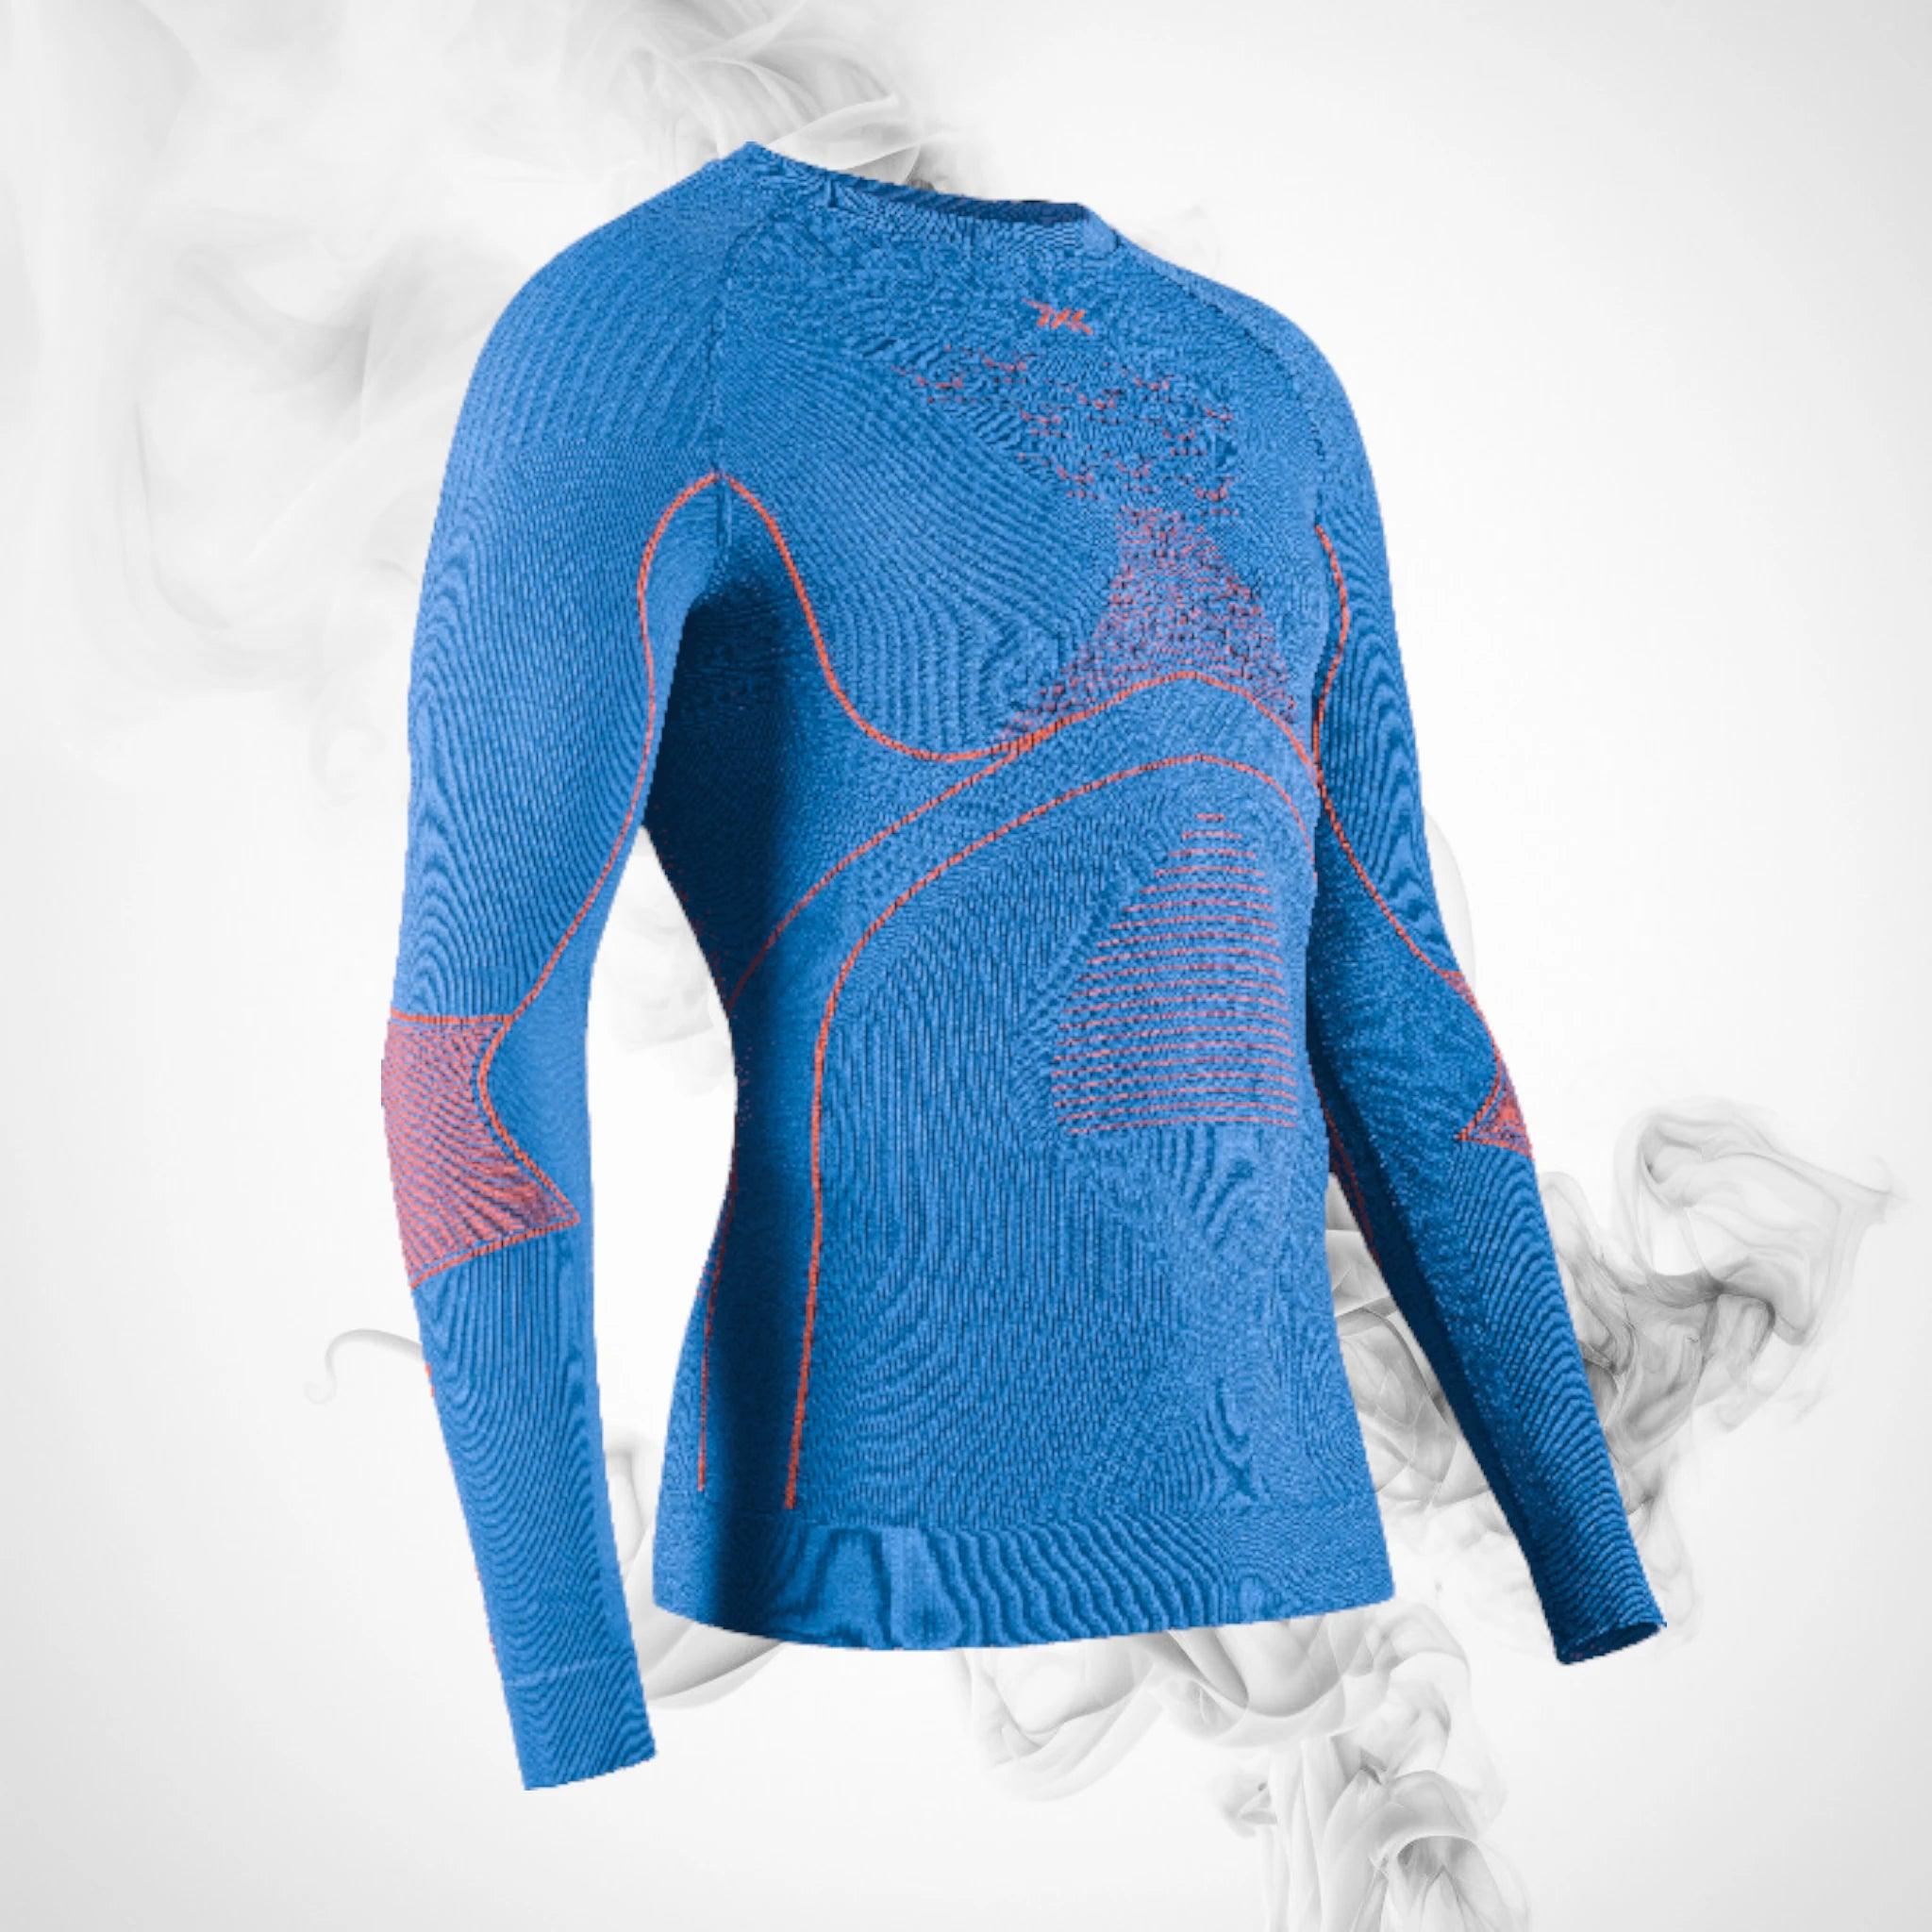 Ski Thermal underwear X-bionic Energy Accumulator 4.0 Shirt LG SL Men Galactic Blue/Vibrant Orange - 2023/24 - Dash Racegear Dash Racegear, Thermal Wear underwear